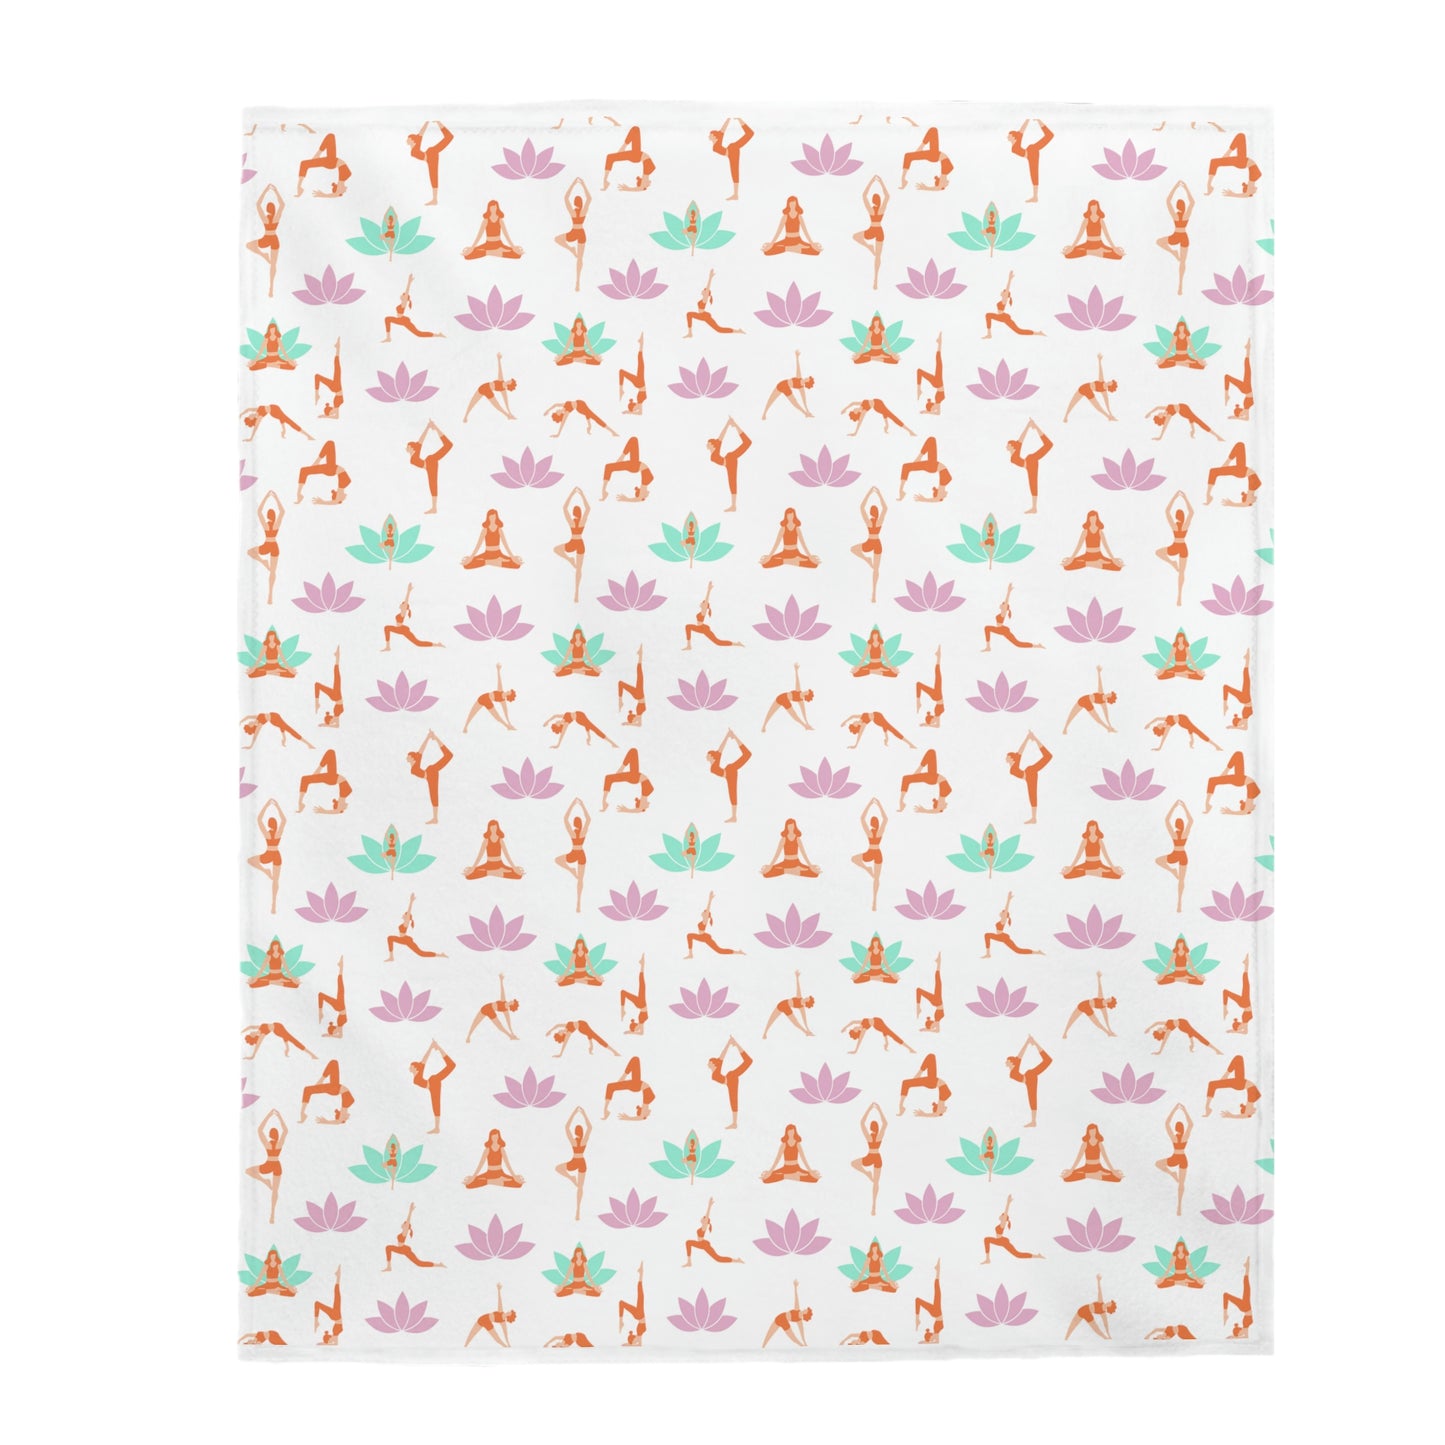 Yoga Plush Blanket, Meditation Yoga Blanket, Yoga gifts